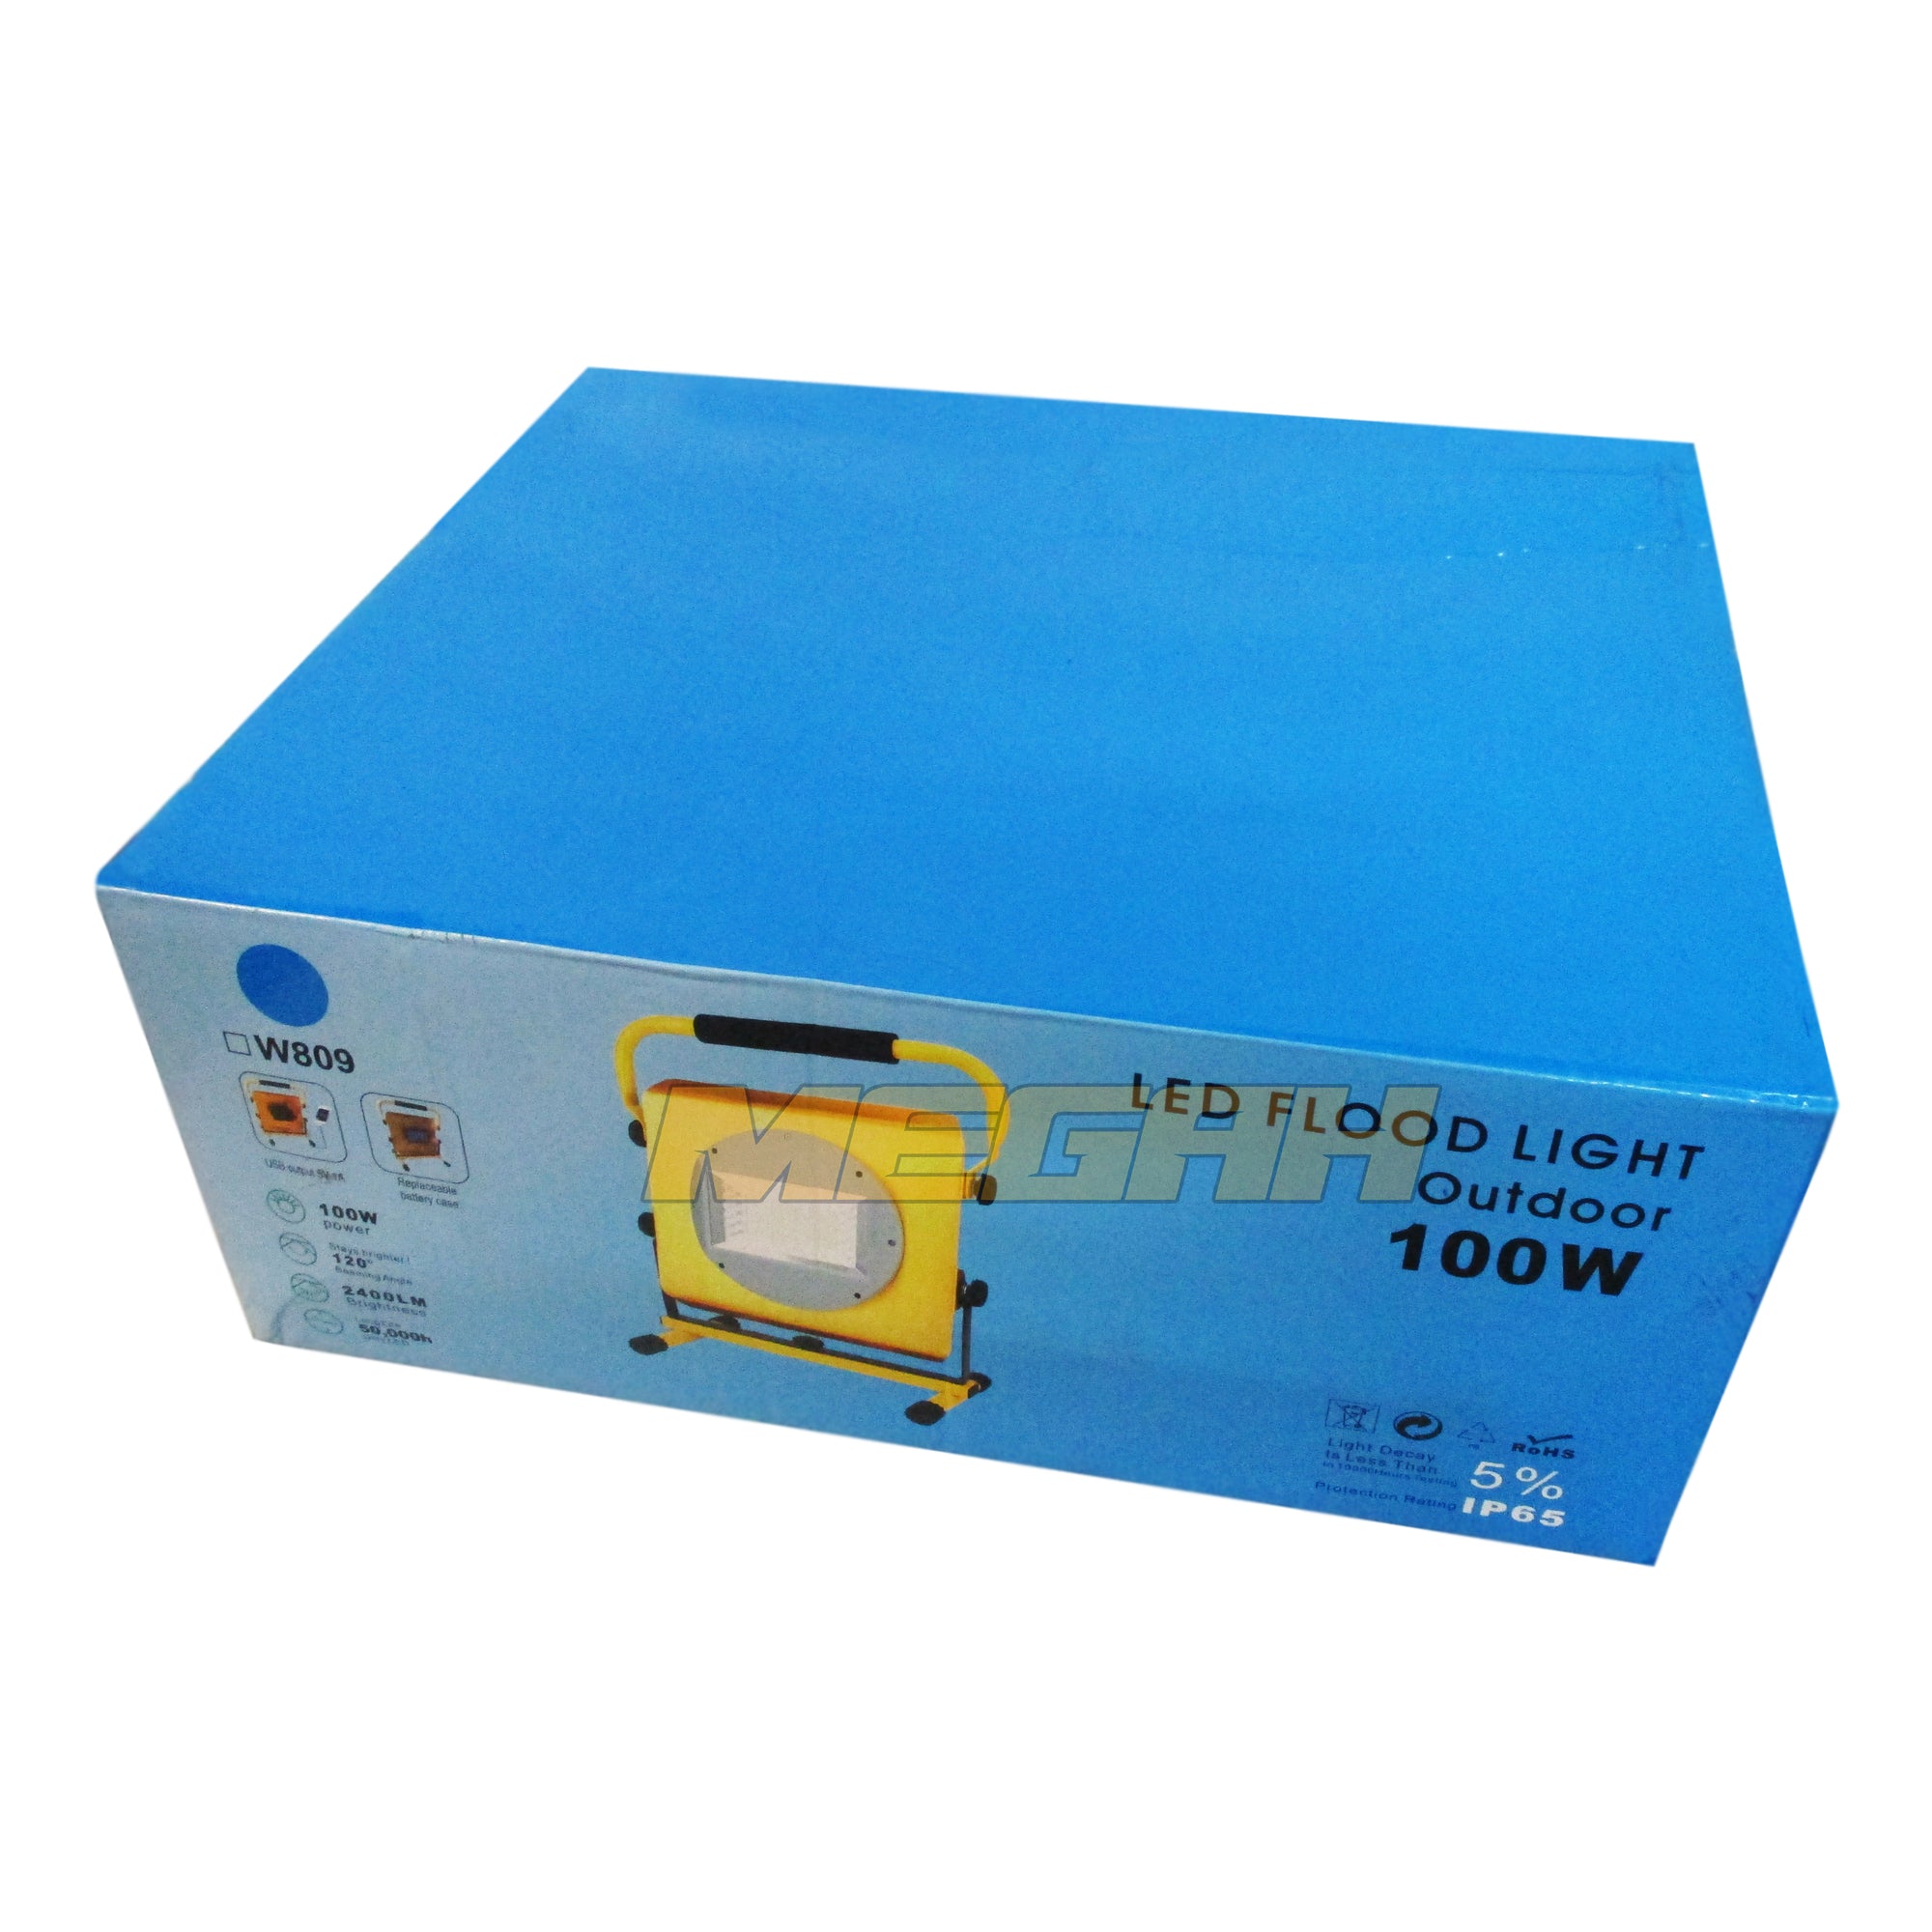 LAMPU SOROT LED OUTDOOR 100W (LS336) - Megah Sport